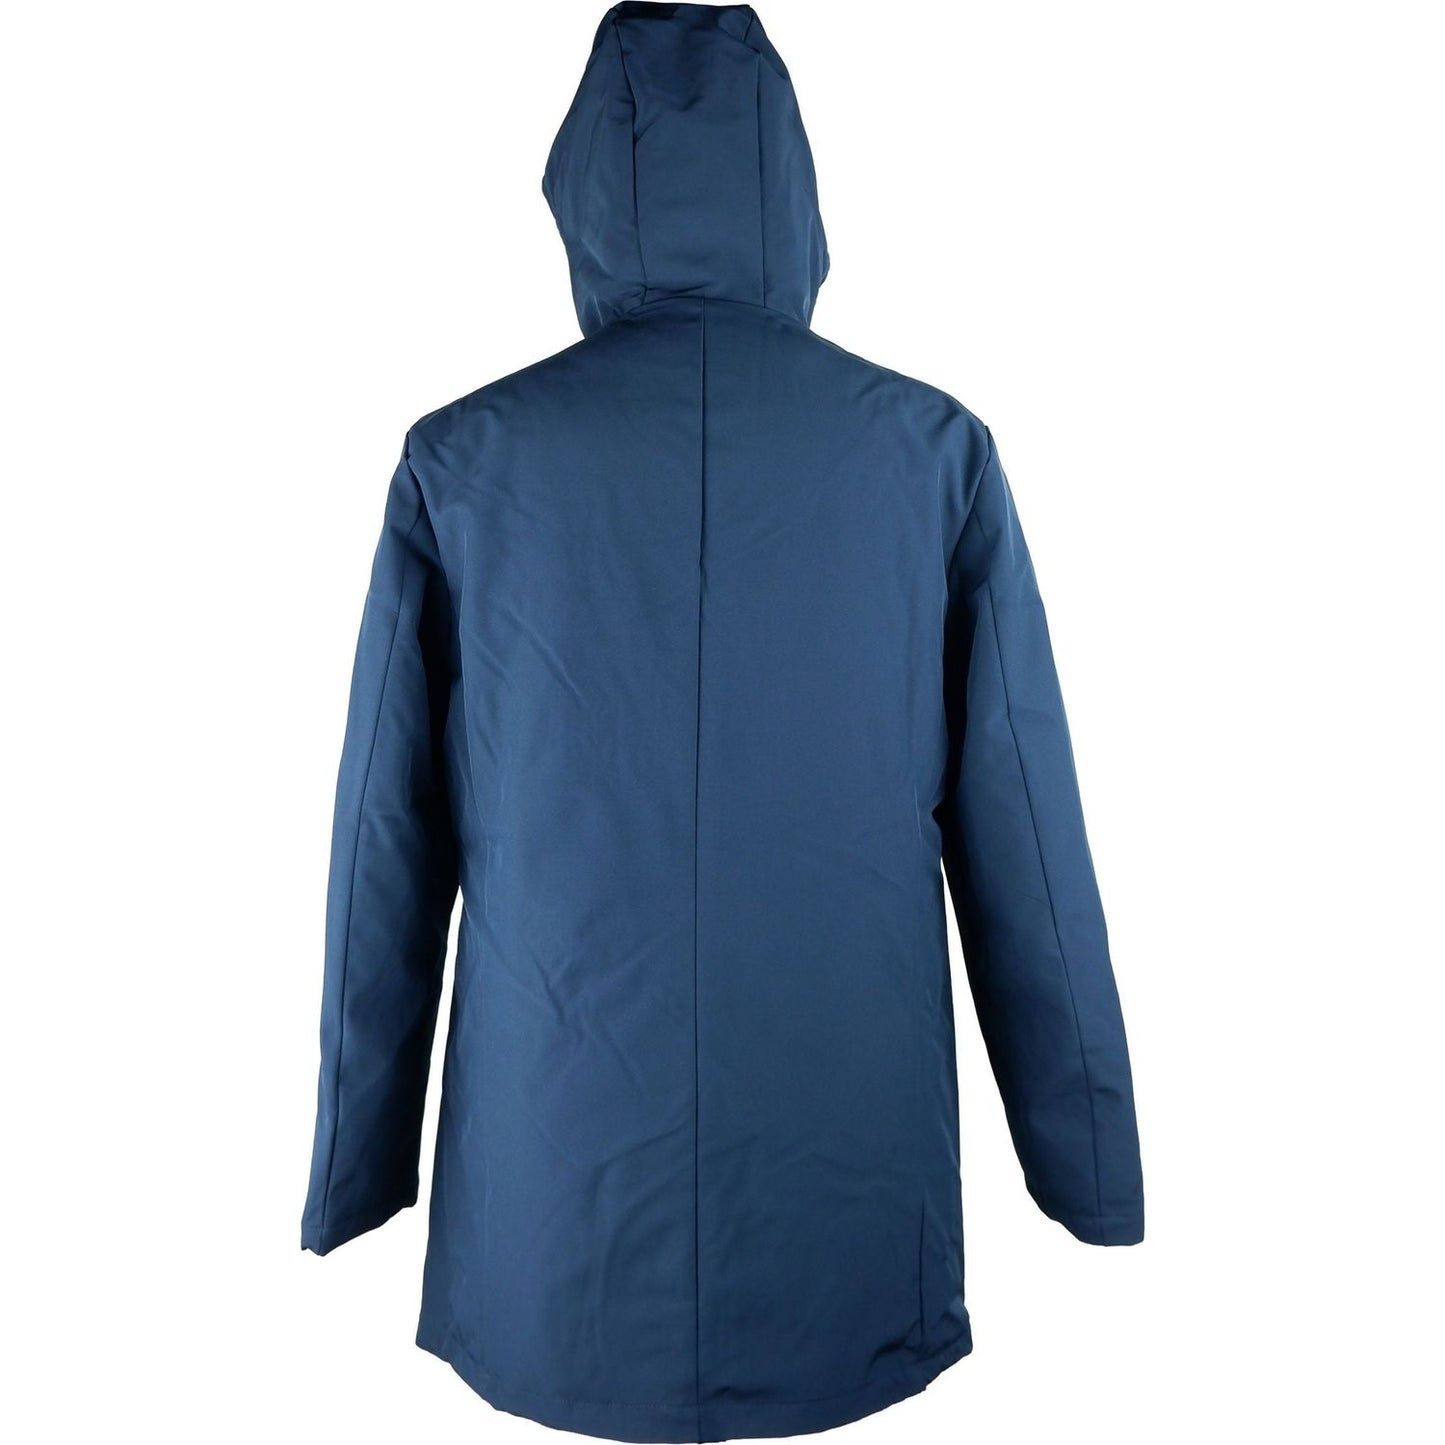 Refrigiwear Elegant Men's Long Jacket with Hood blue-polyester-jacket-3 MAN COATS & JACKETS stock_product_image_5264_2833010-scaled-fdc585d5-1c3.jpg